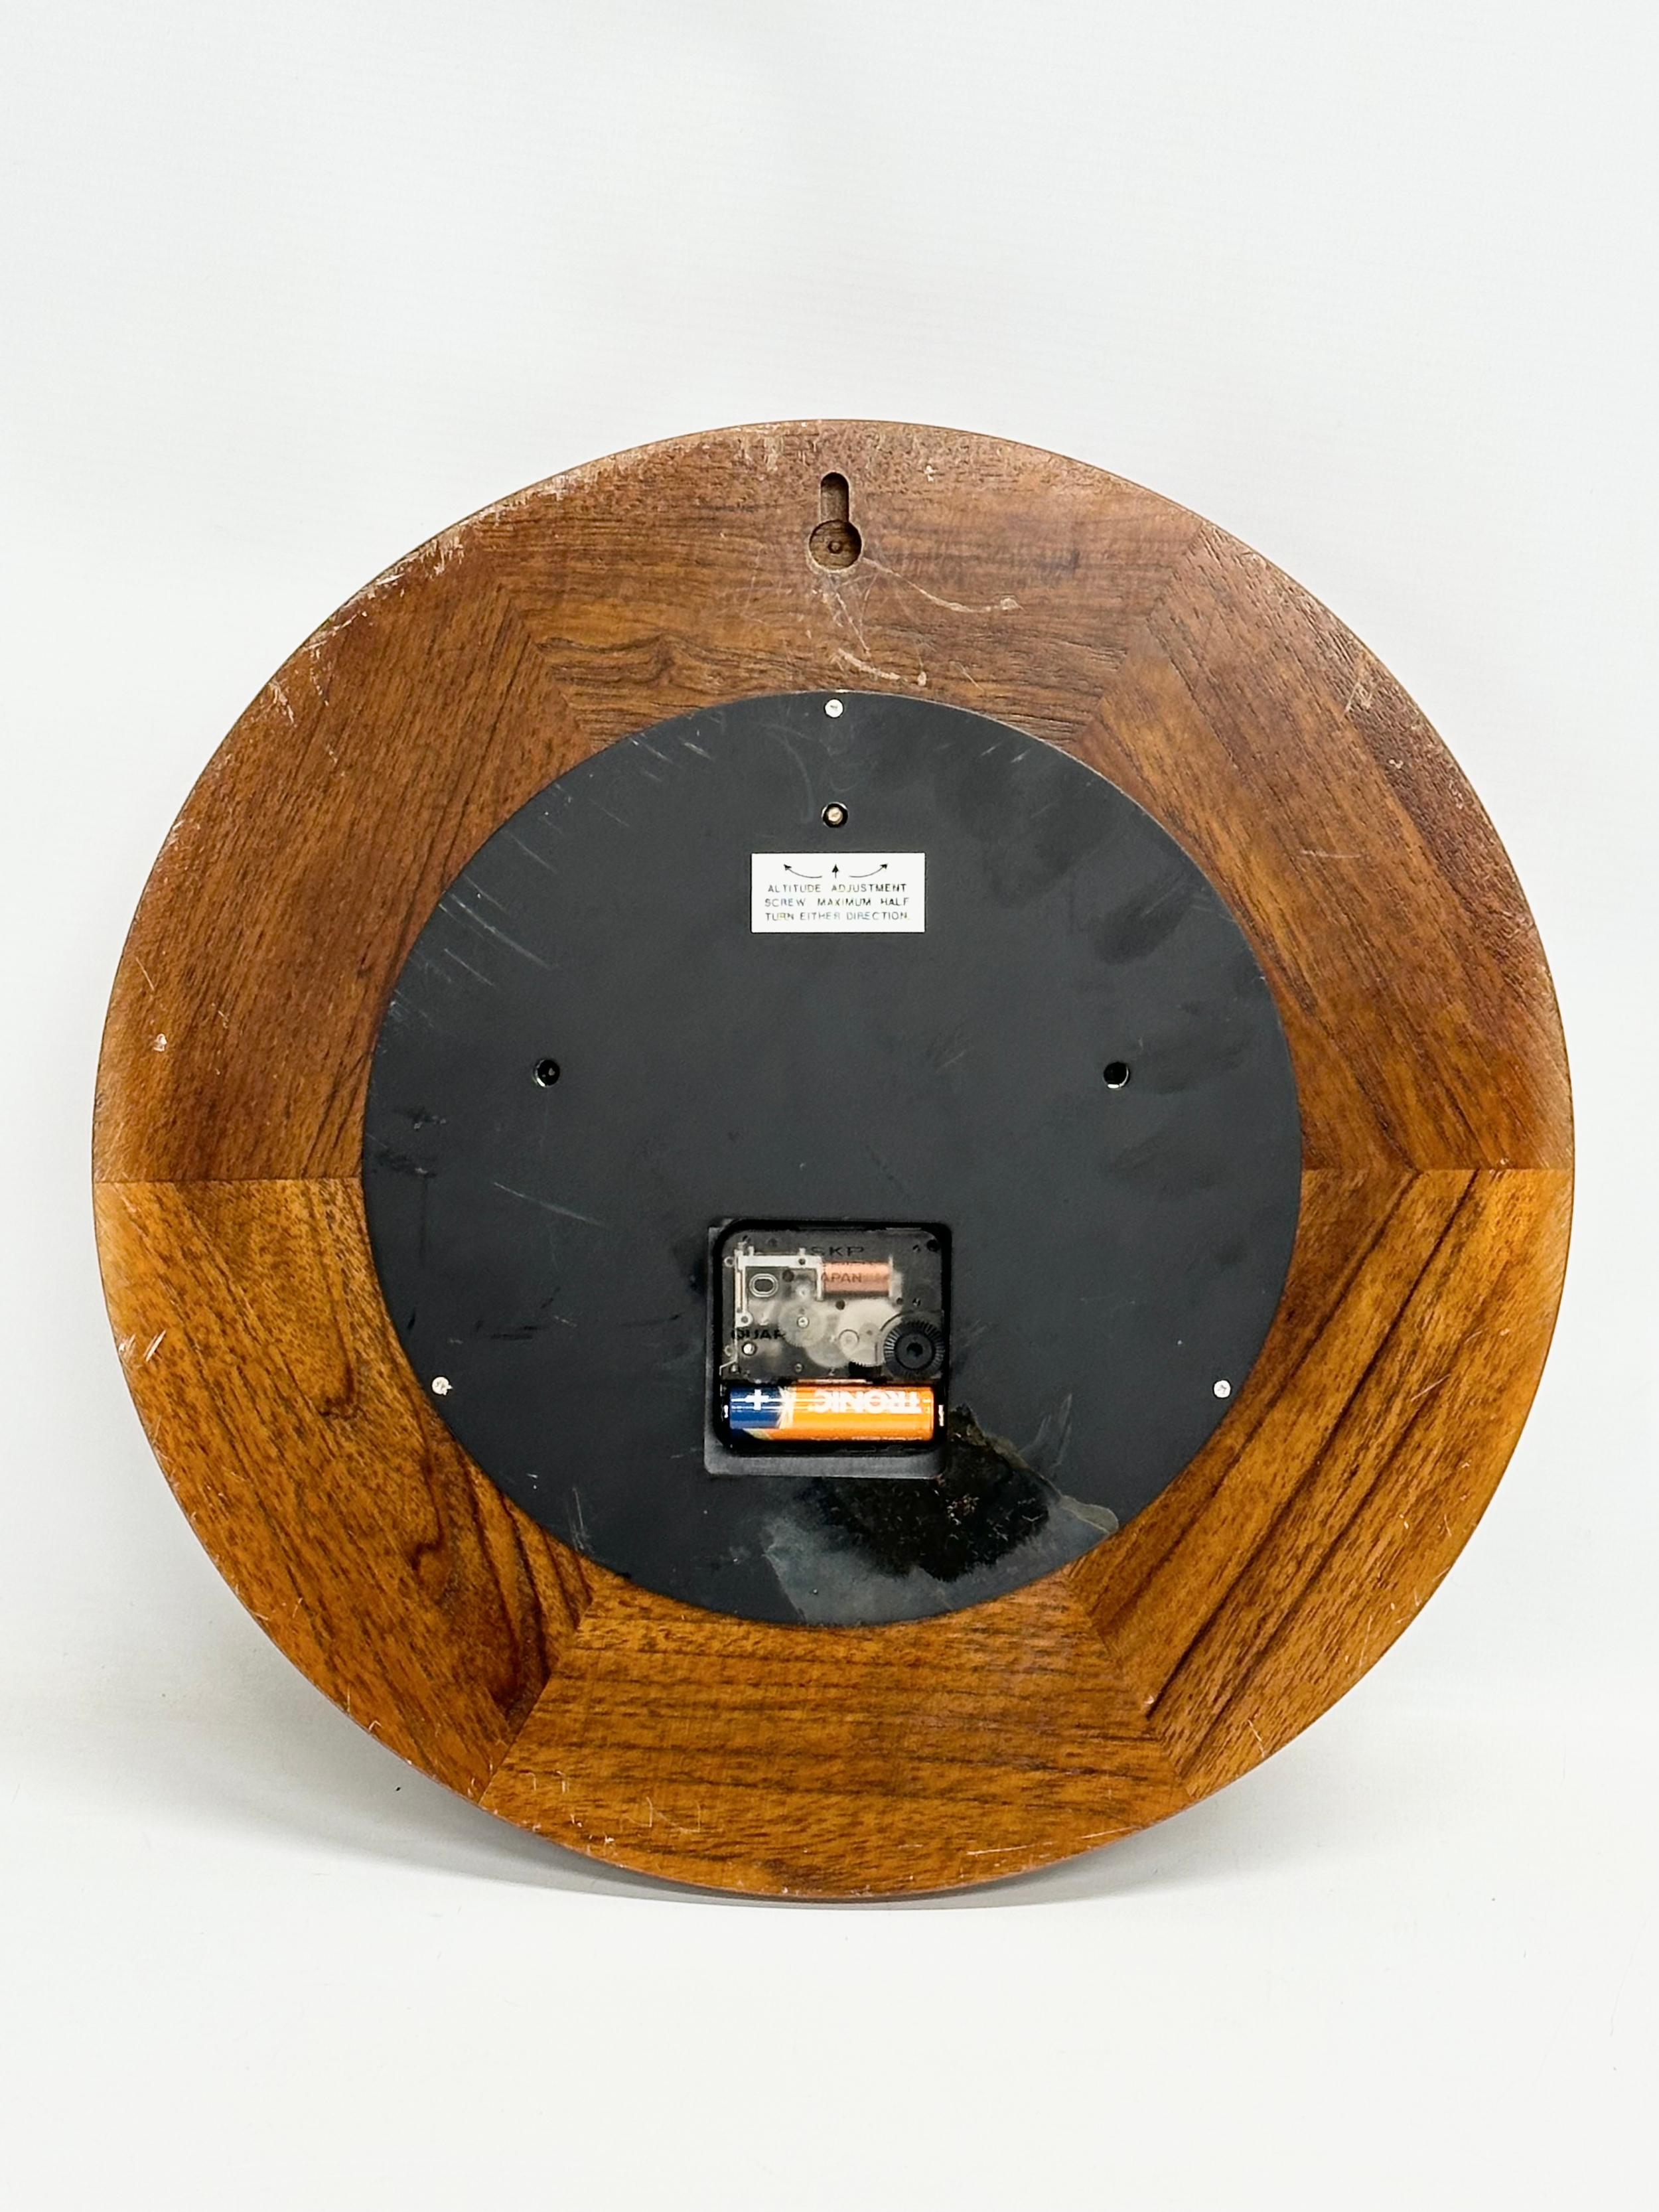 A Plastimo Porthole Weatherman barometer wall clock. 34.5cm - Image 5 of 5